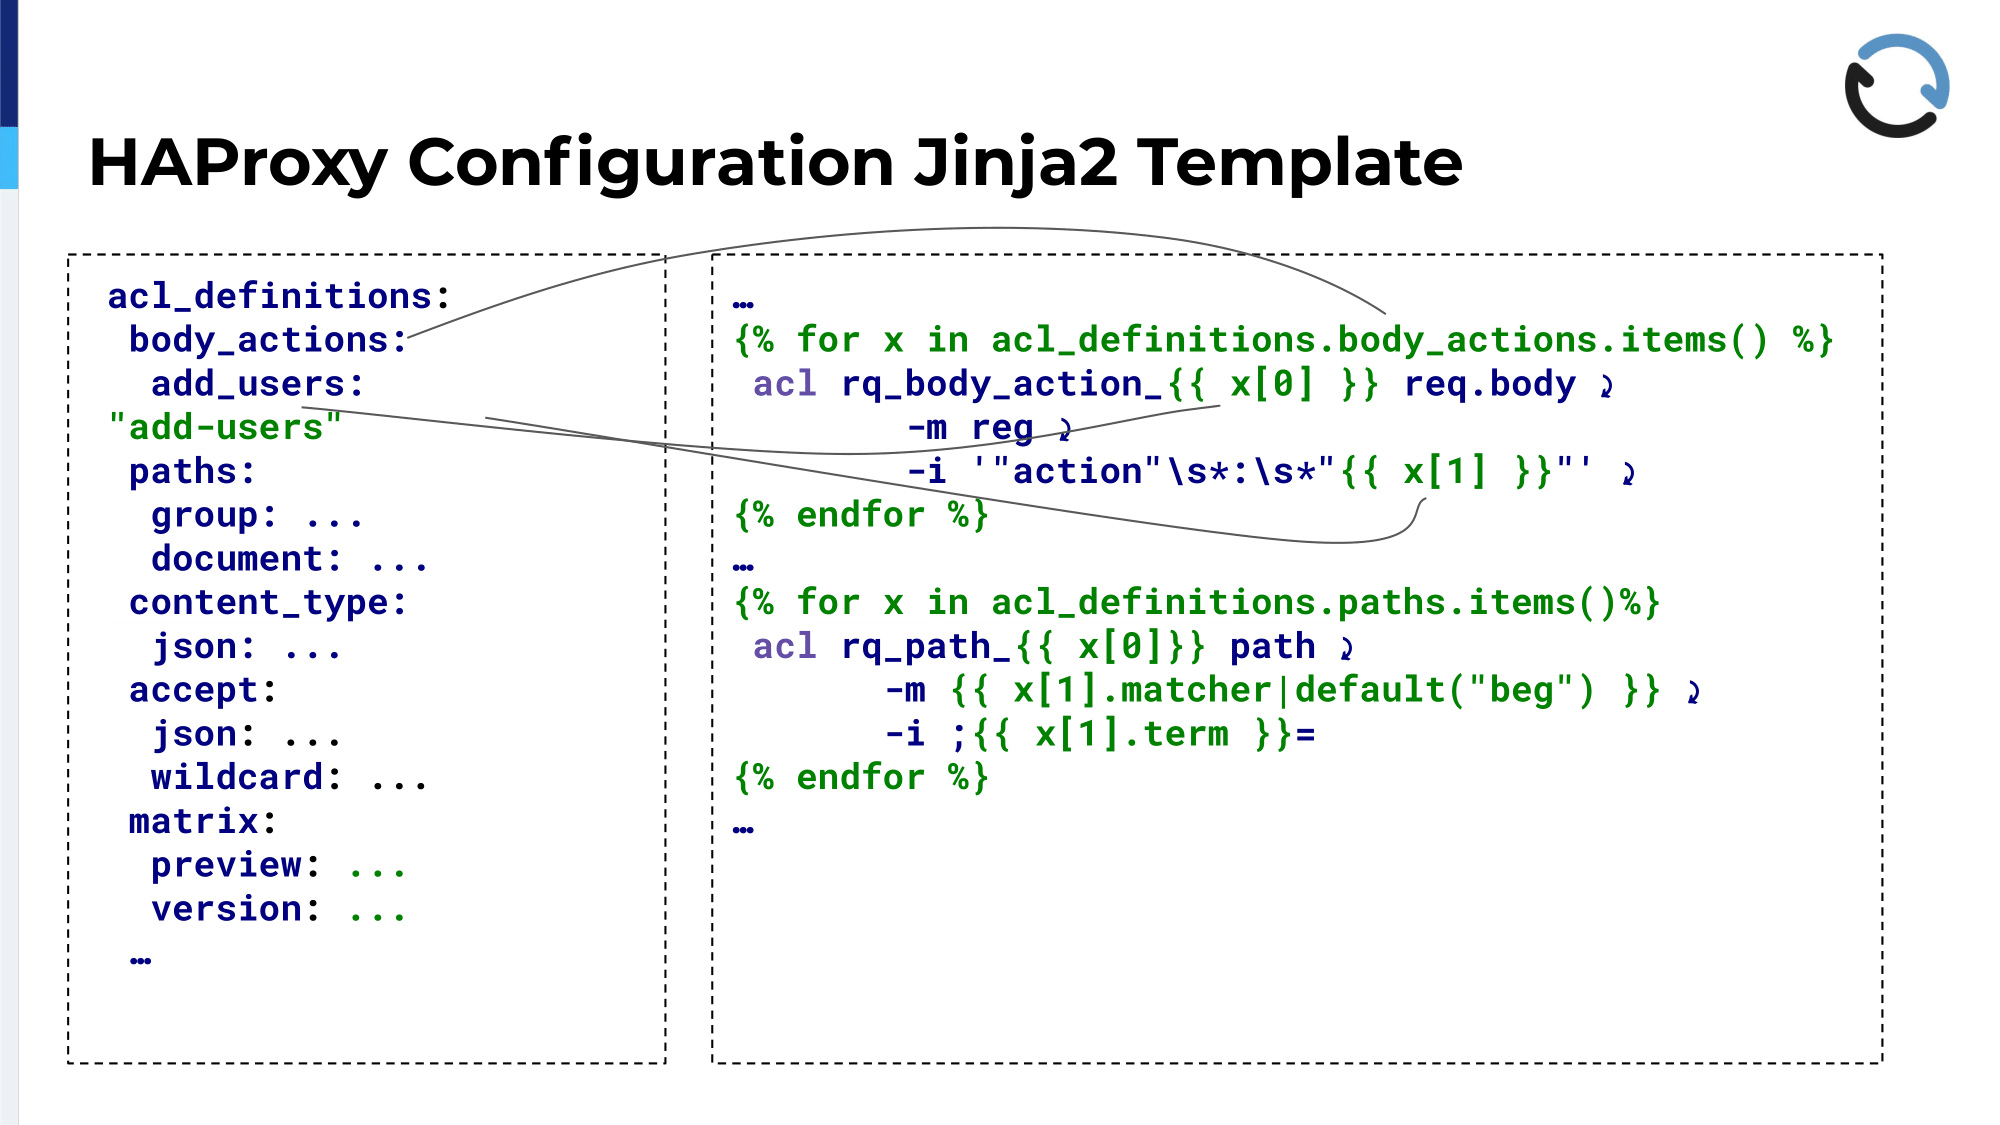 10.-haproxy-configuration-jinja2-template-1